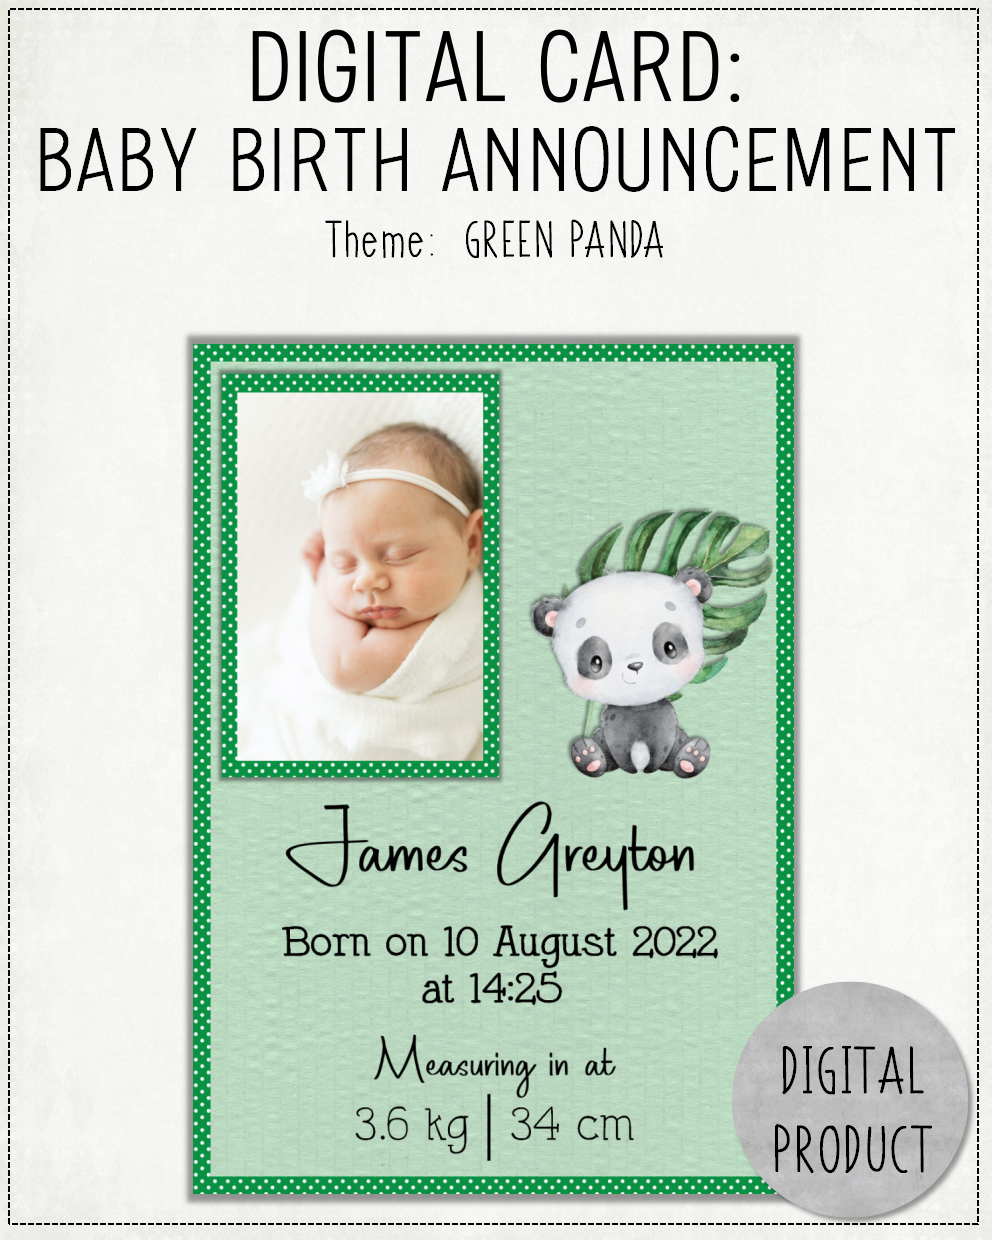 DIGITAL CARD:  Baby Birth Announcement - Green Panda (English or Afrikaans)